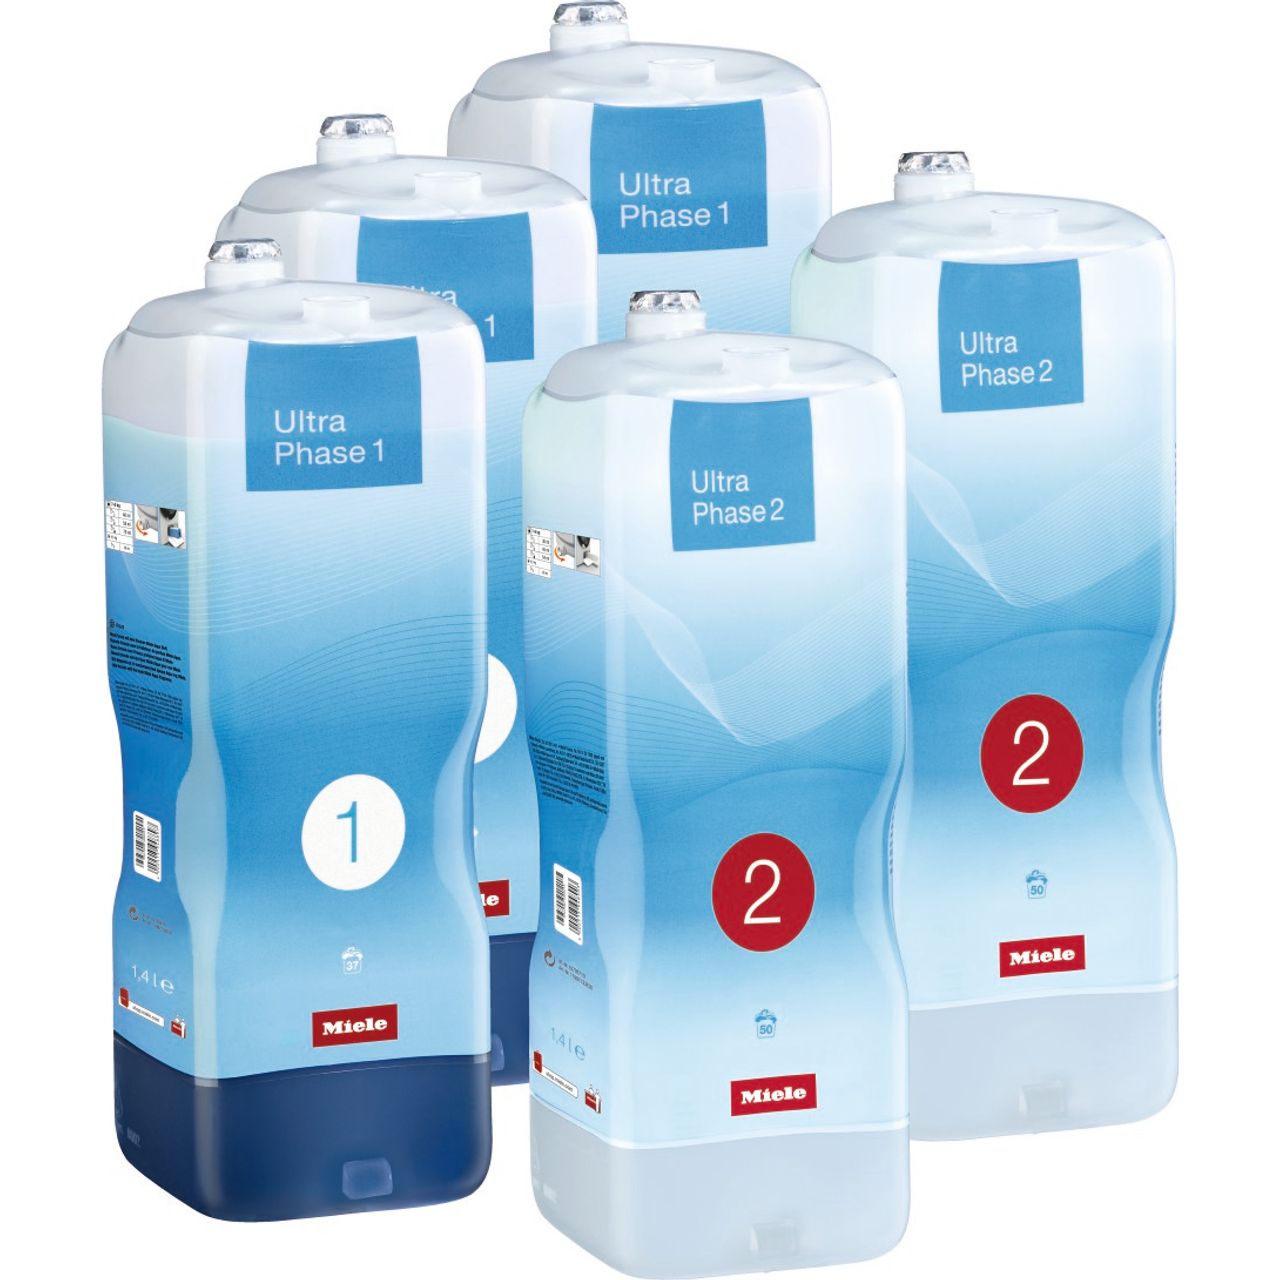 Miele W1 TwinDos UltraPhase 1 & 2 Bundle Washing Machine Detergent Review